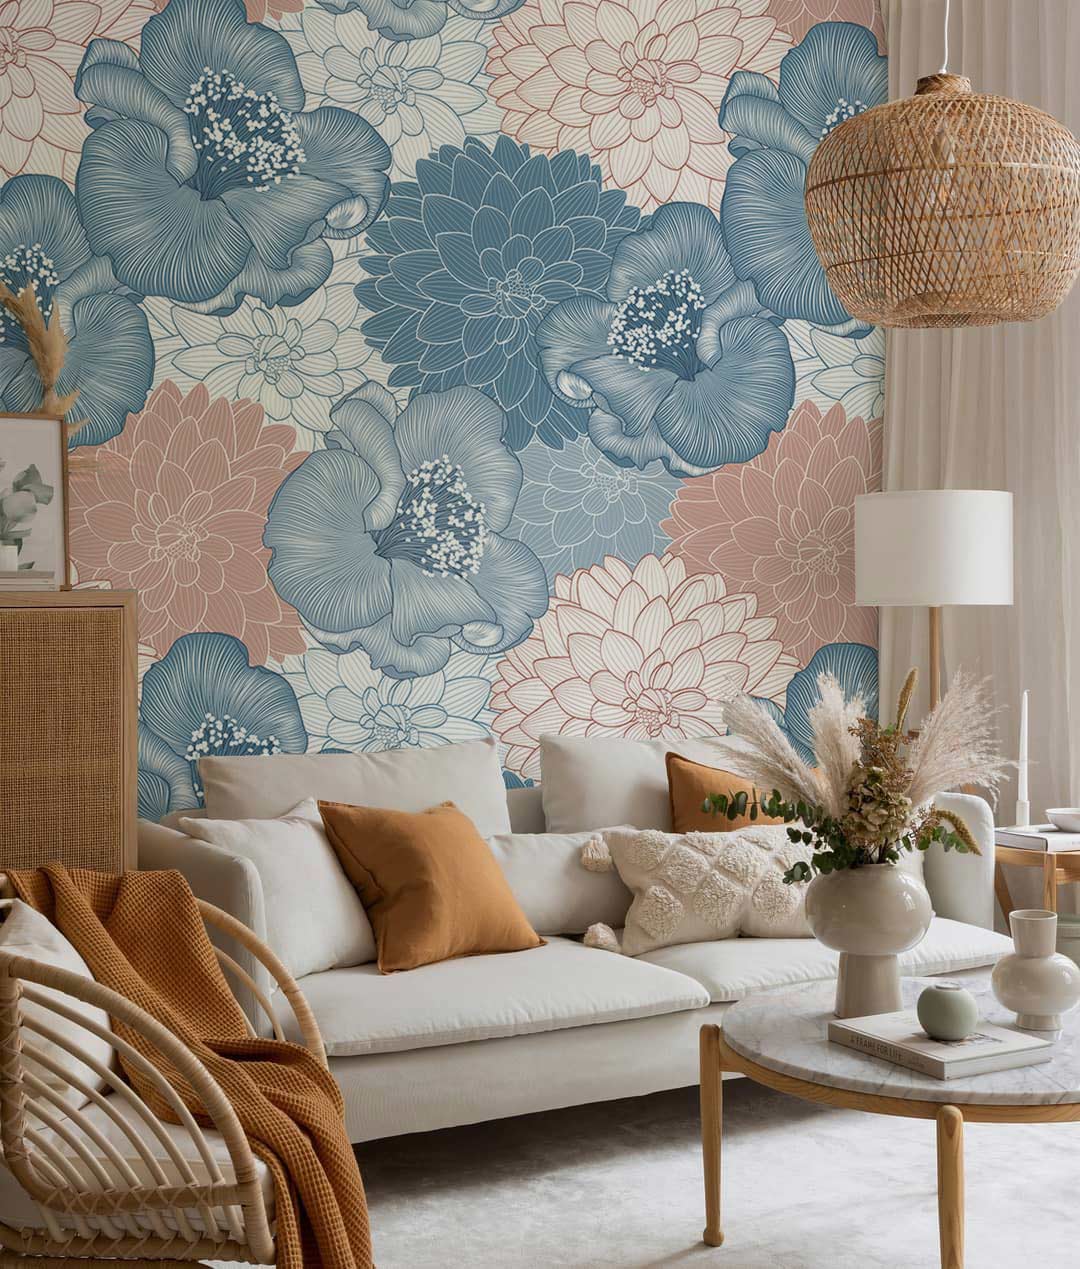 adorn your walls with vinatge flower patetrn wallpaper.